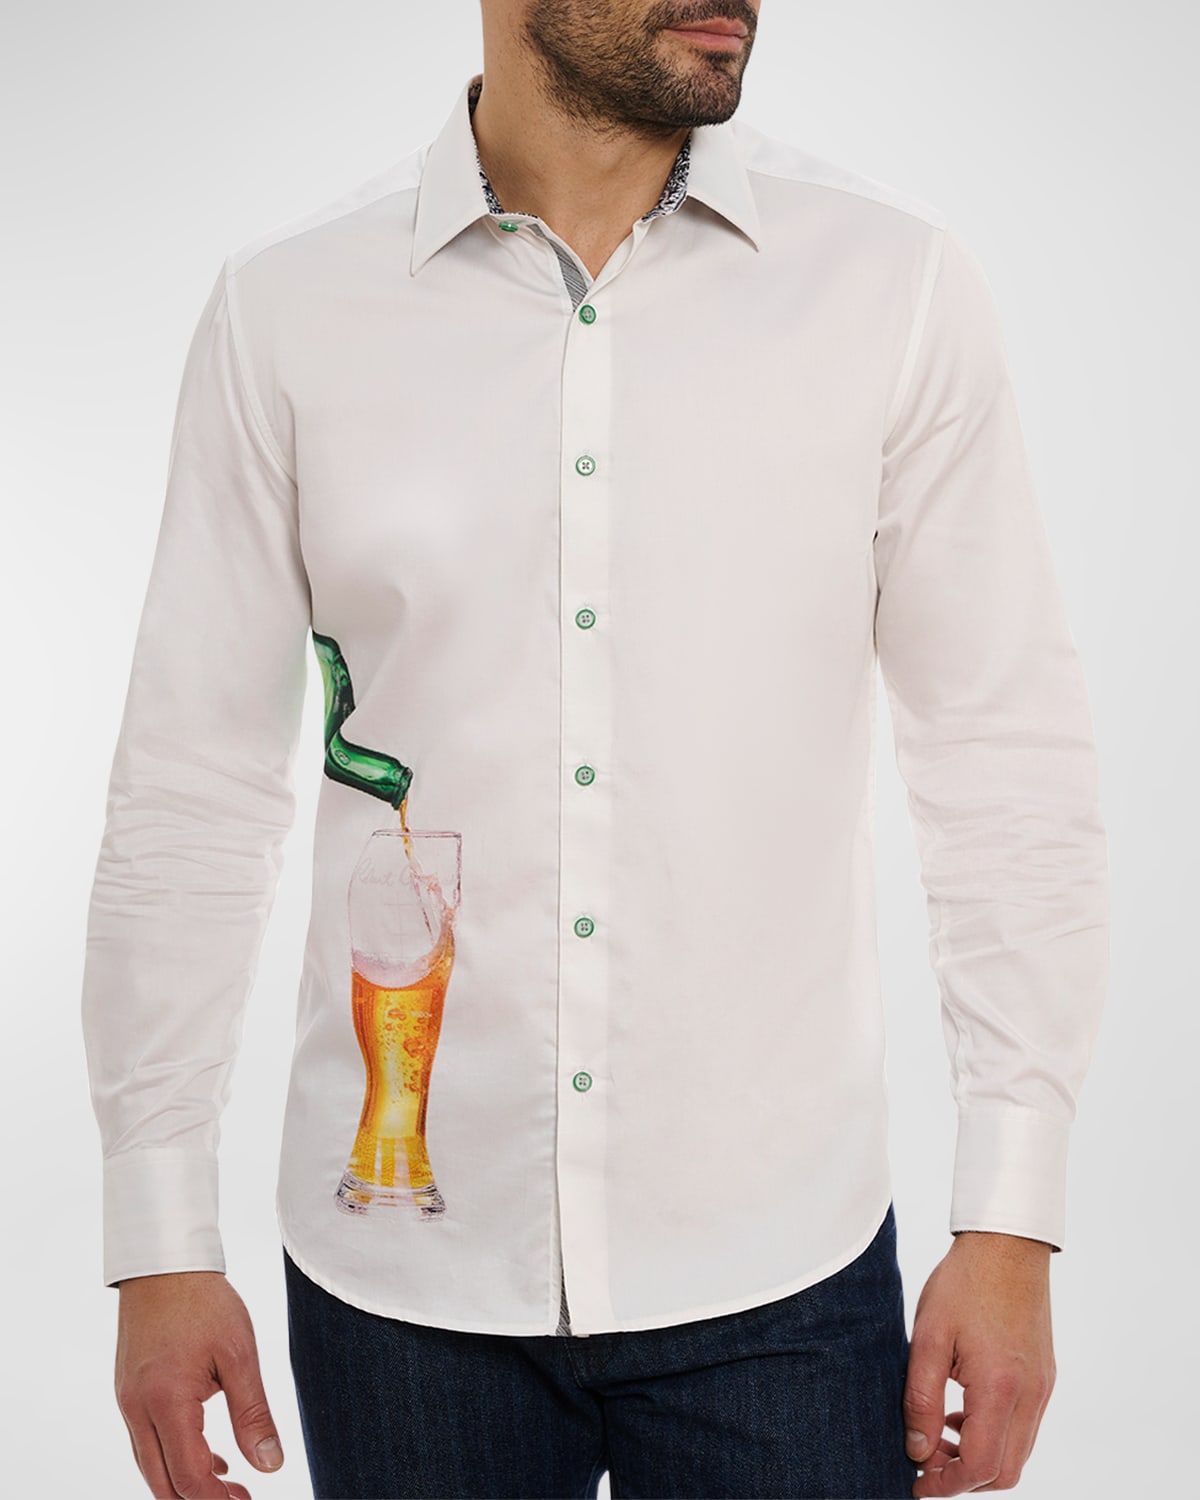 Men's Made to Measure Cotton Sport Shirt